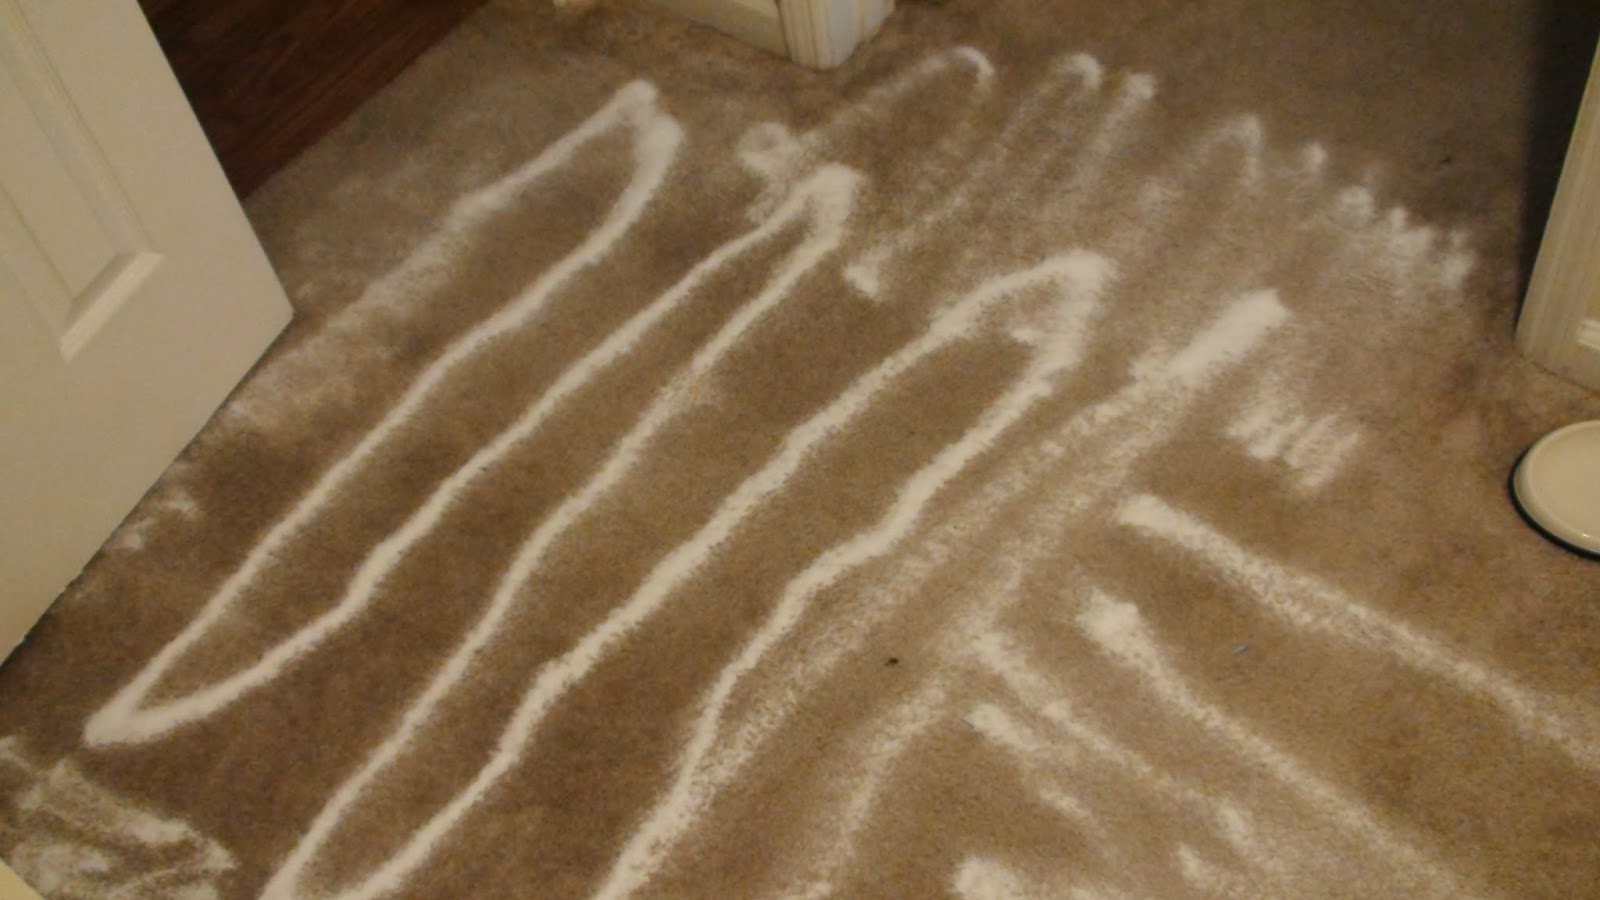 Coating Floor With Baking Soda Flea, Home Remedies For Fleas On Hardwood Floors